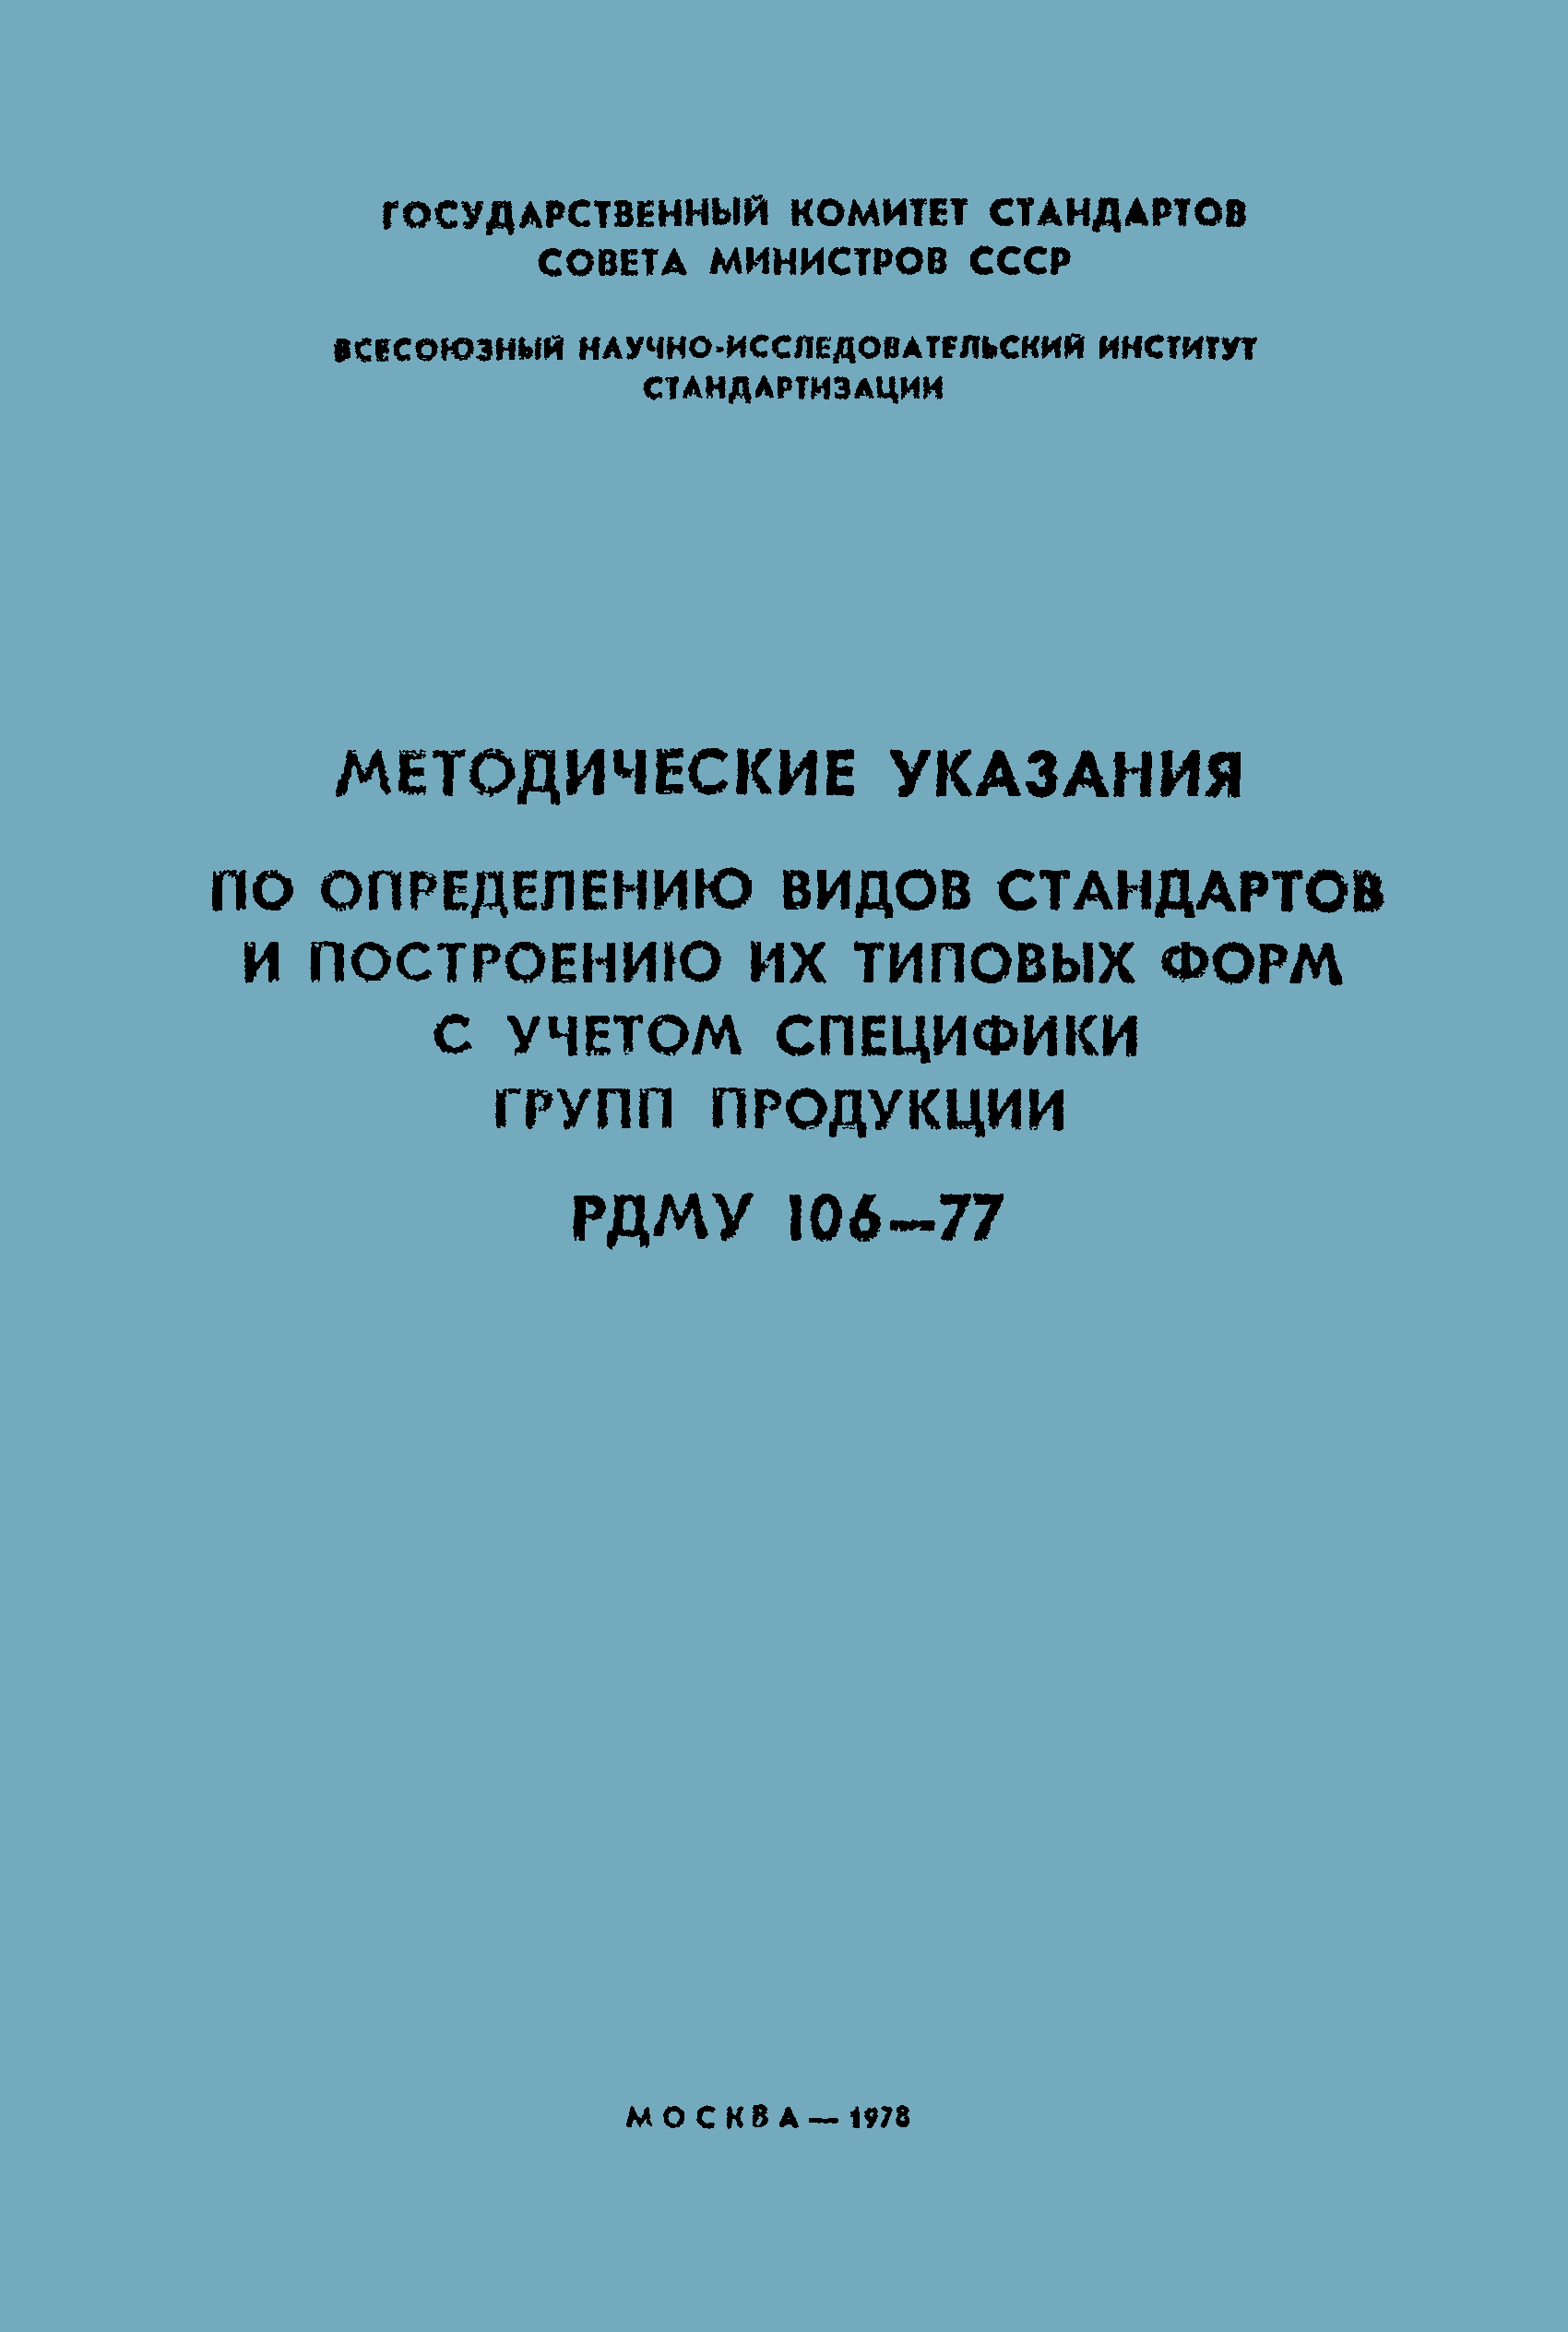 РДМУ 106-77